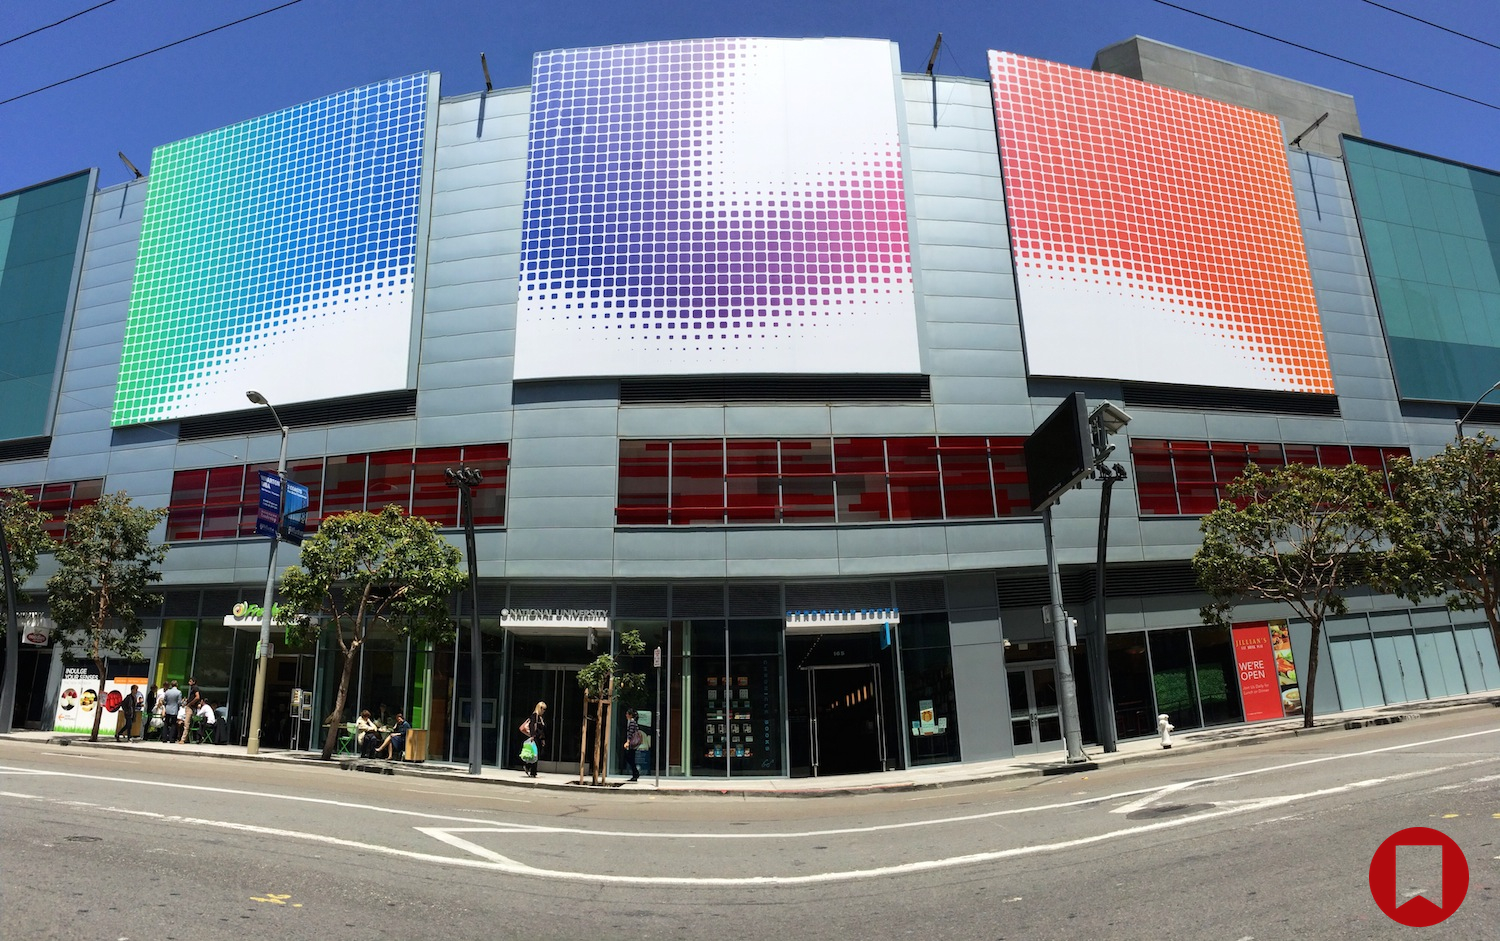 Banners da WWDC 2014